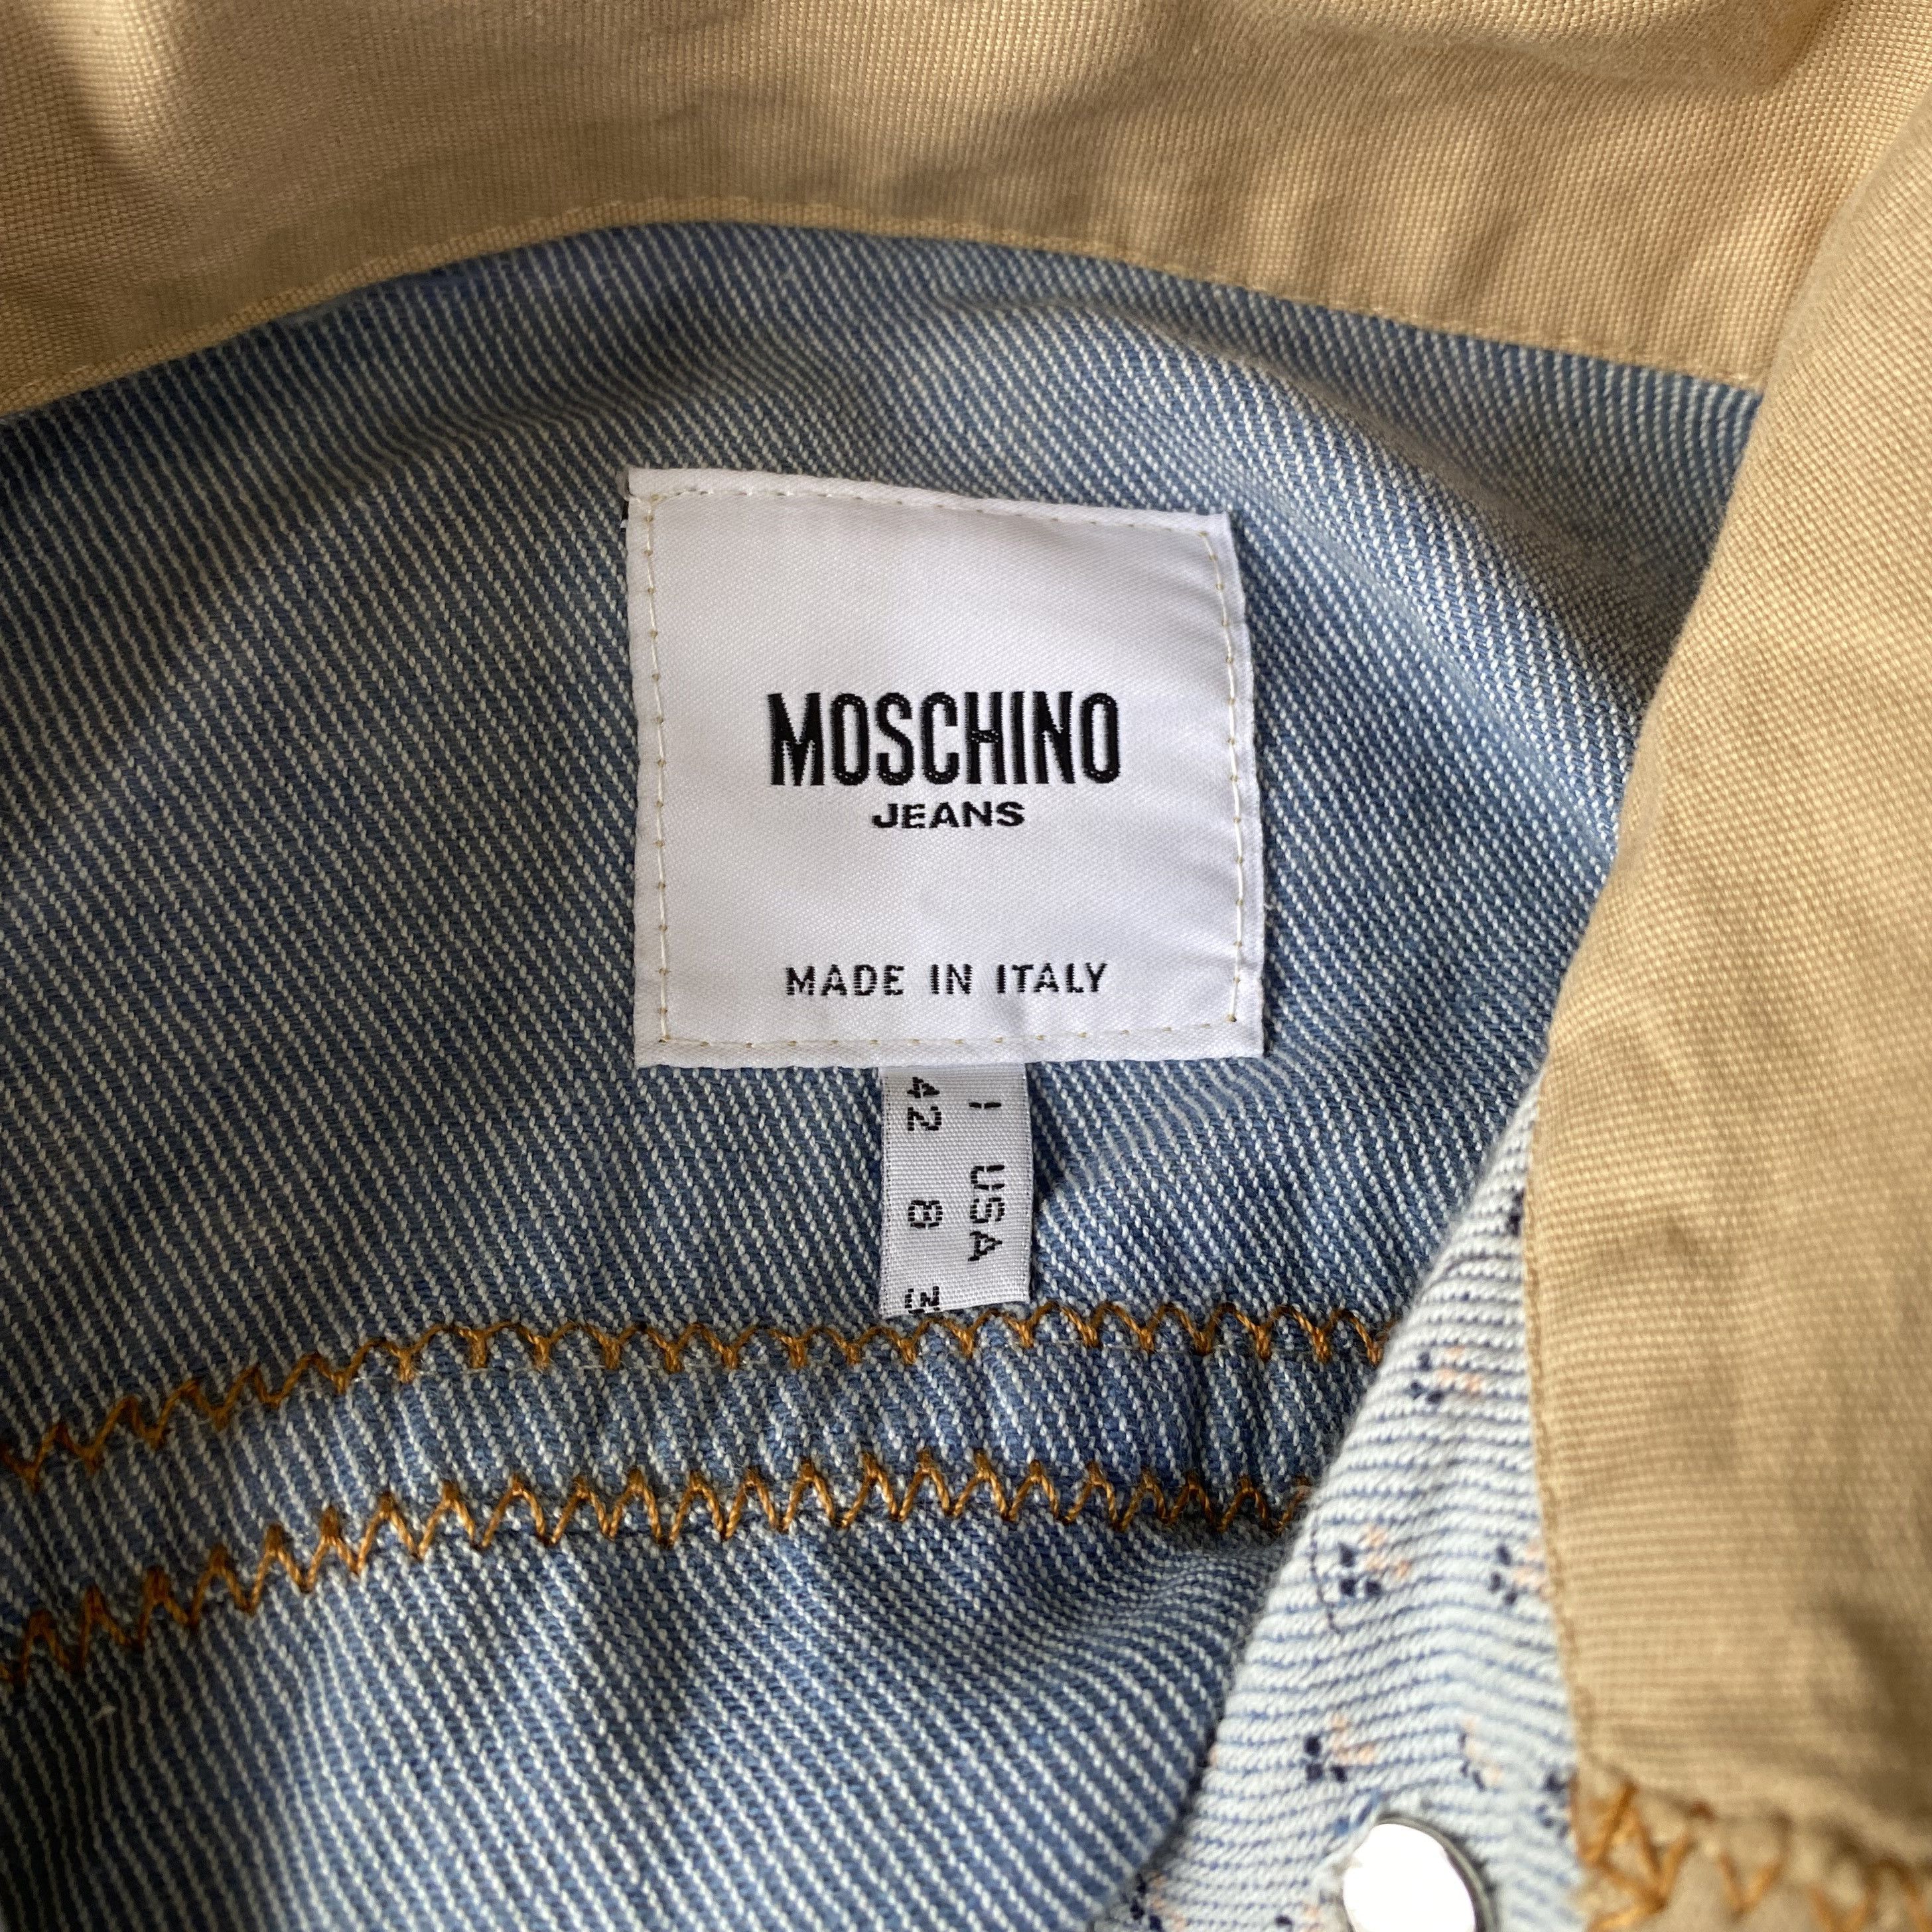 Vintage MOSCHINO Jeans Vintage Light Blue Brown Floral Prints Jacket Size M / US 6-8 / IT 42-44 - 8 Thumbnail